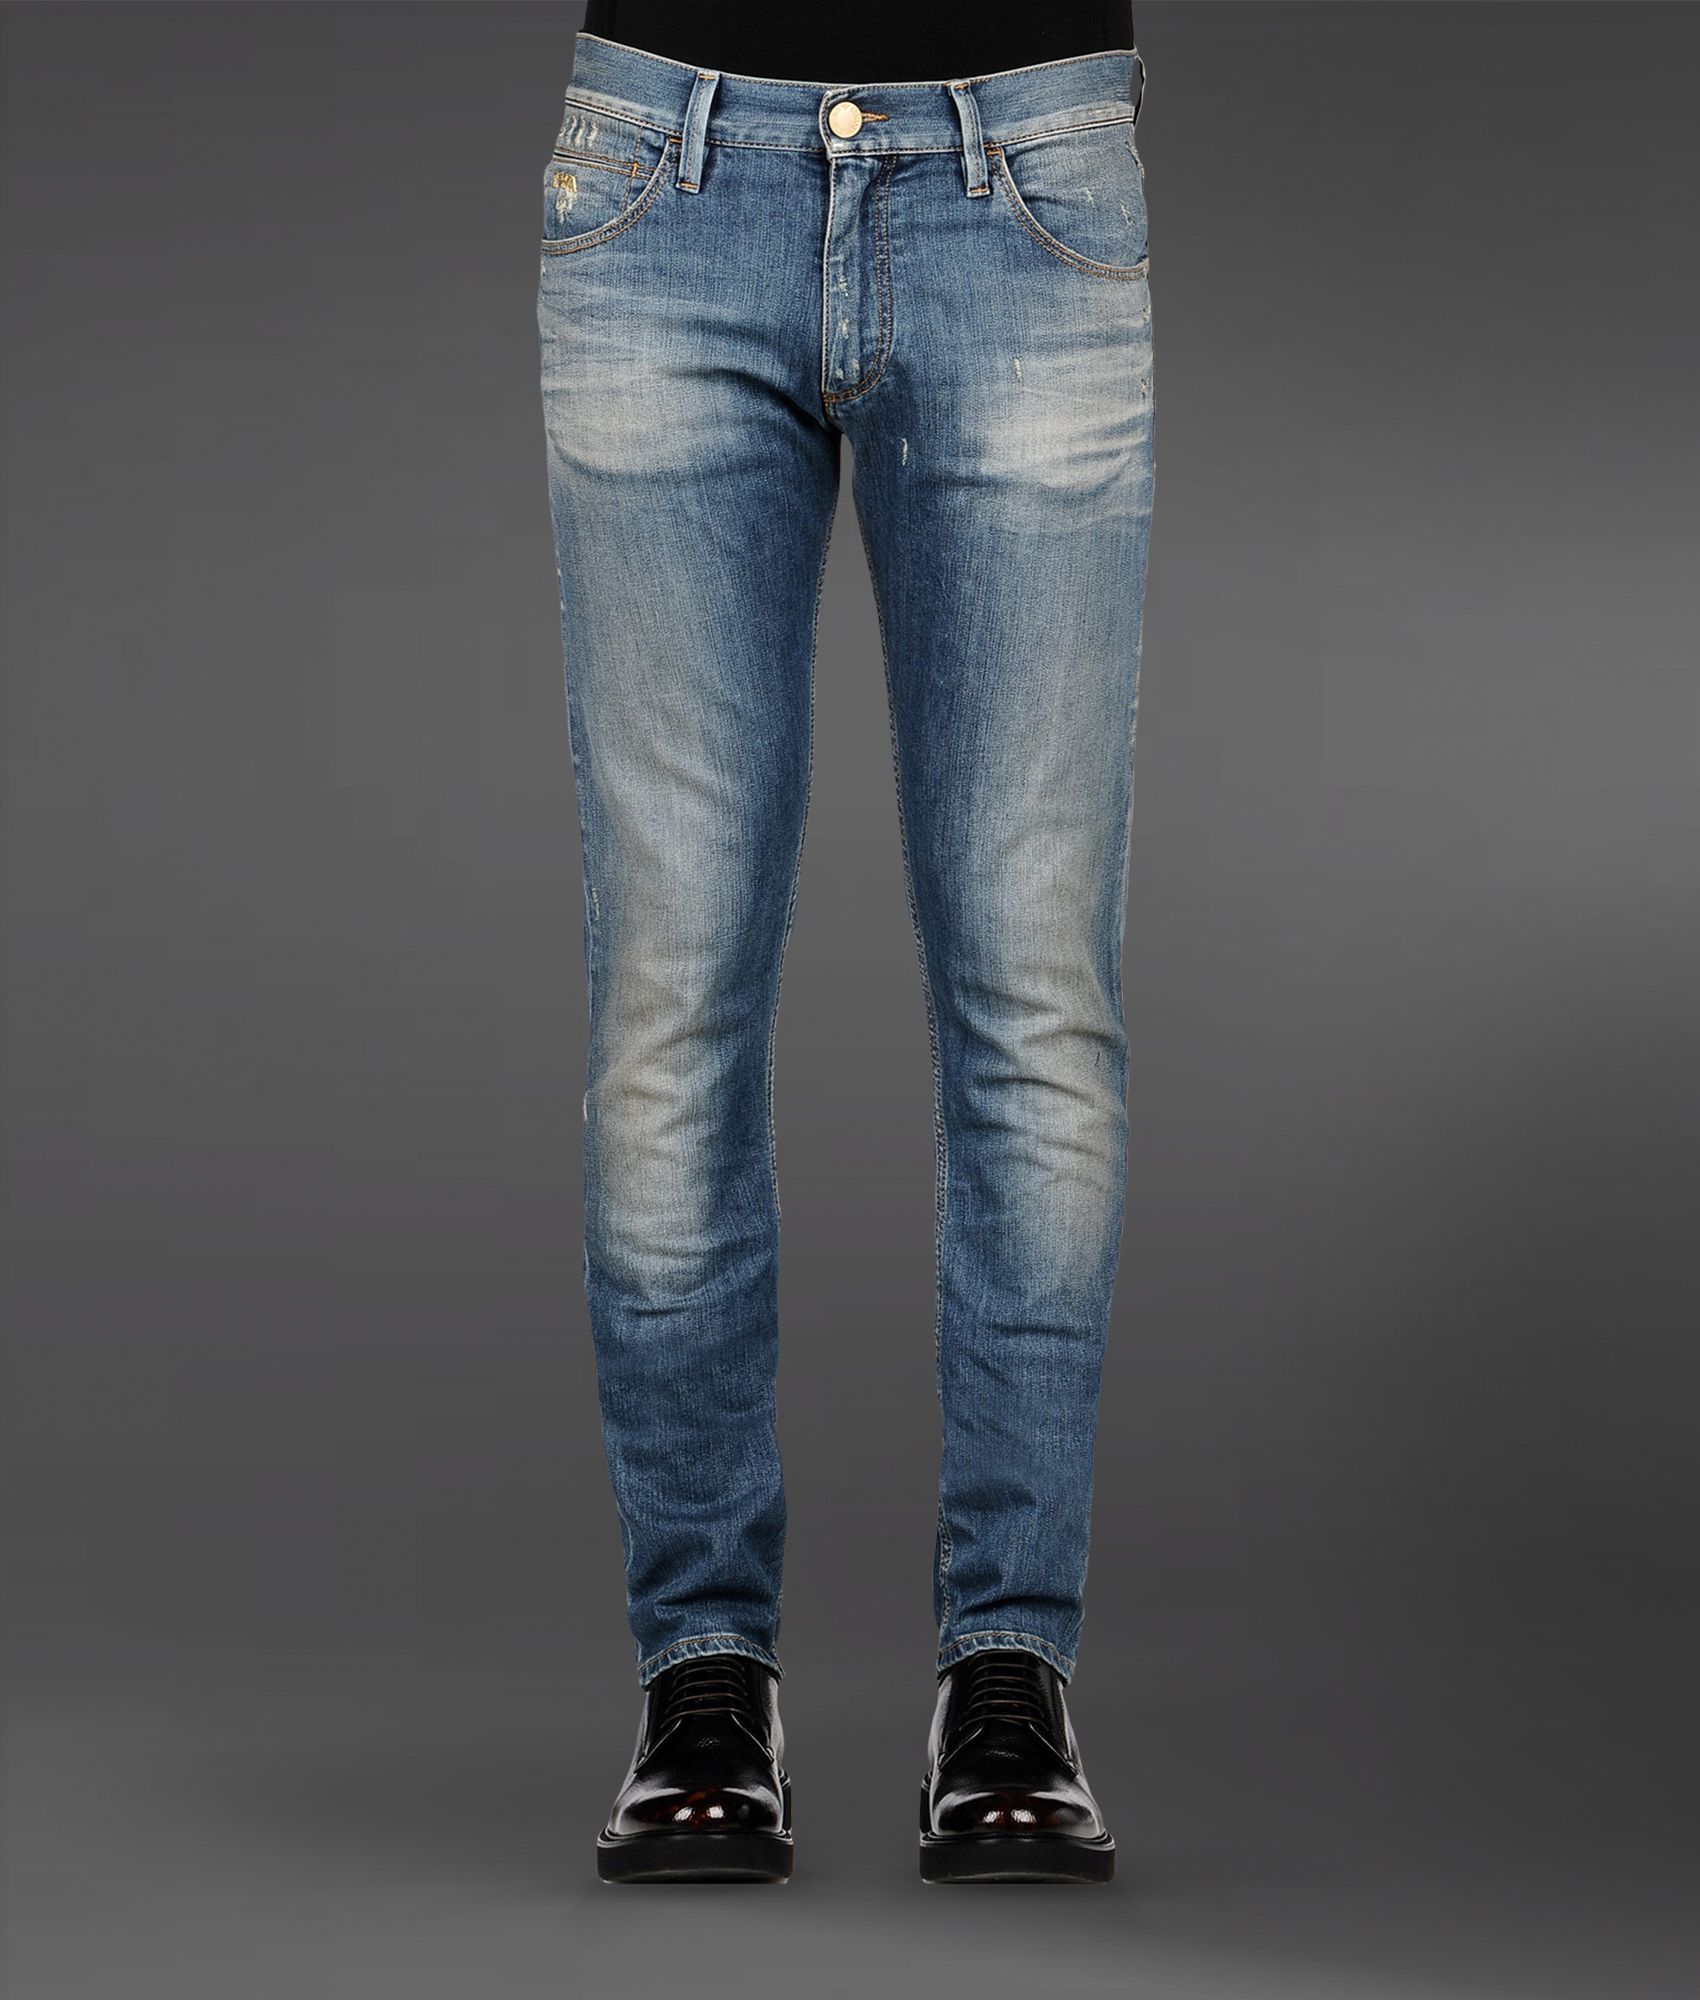 Emporio Armani Regular Fit Medium Wash Jeans in Blue for Men - Lyst